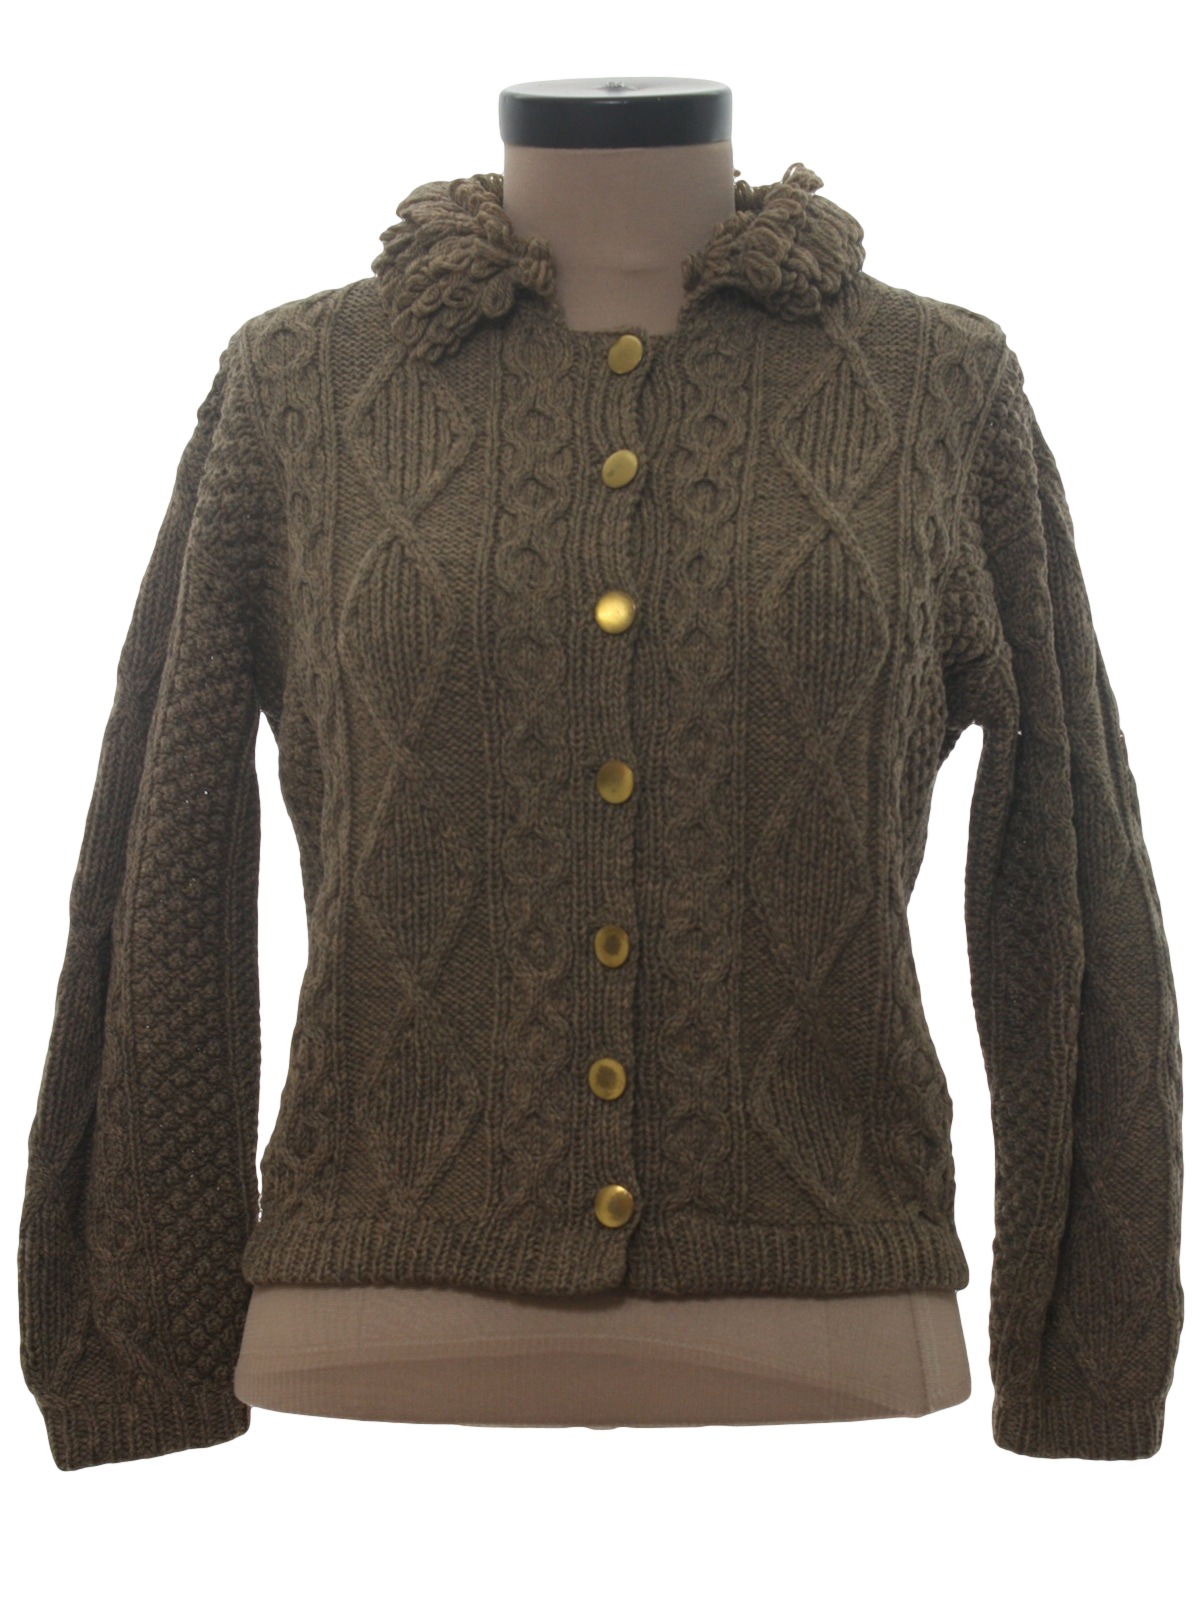 Vintage Kennedy of Ardana Fifties Caridgan Sweater: 50s -Kennedy ...